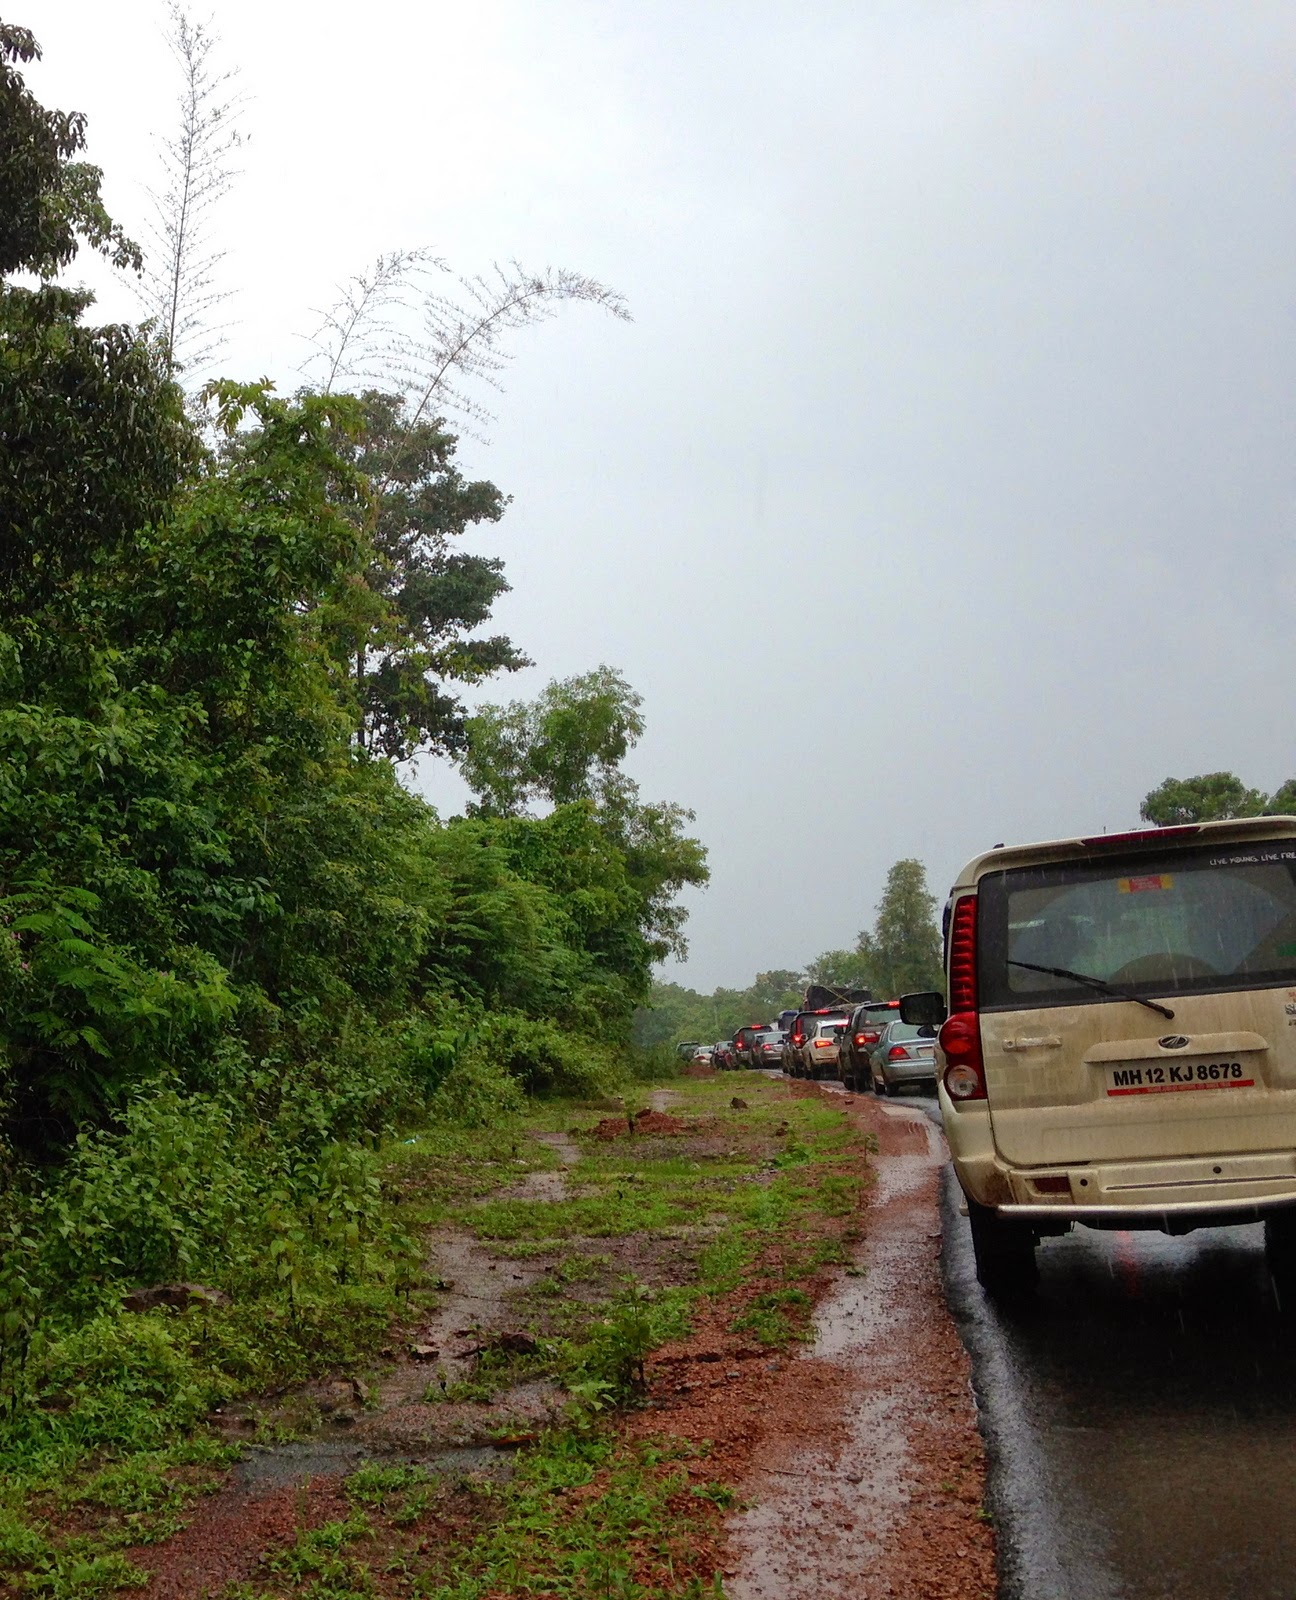 We wind through the roads of Goa soaked in rain!